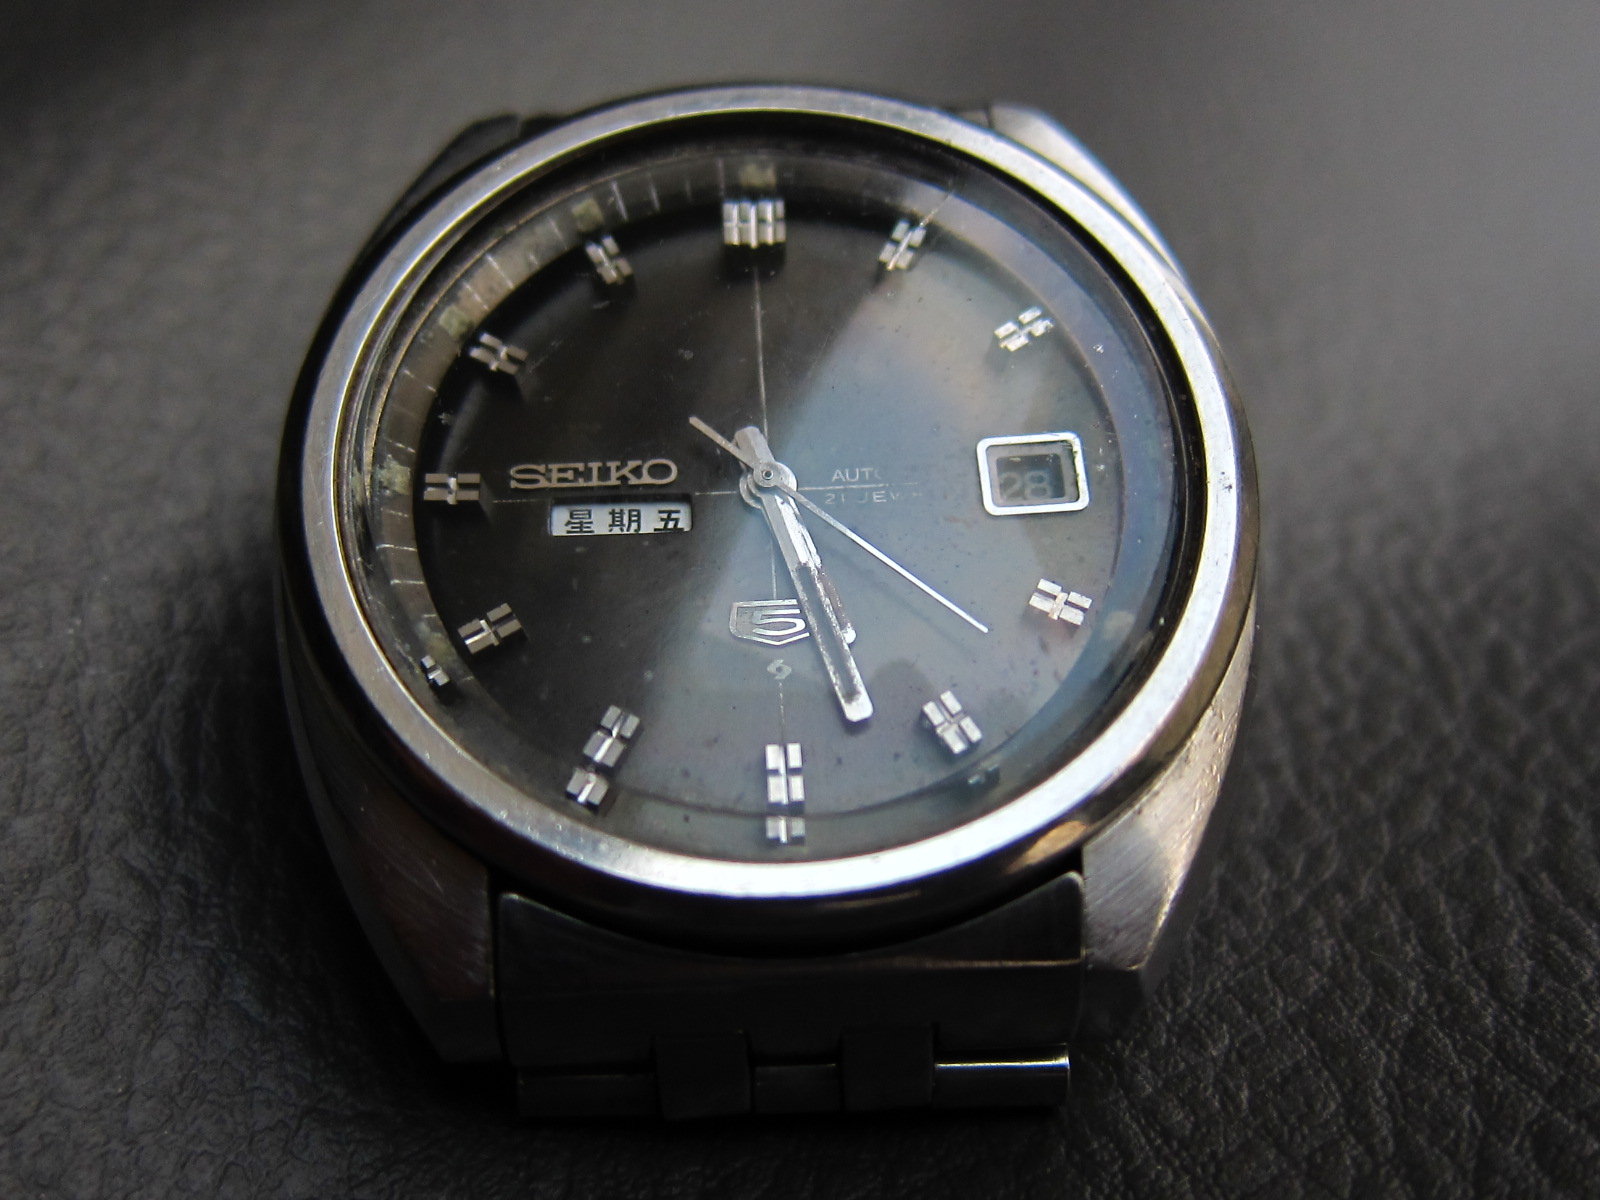 jam & watch: Seiko 5 6119-7183 - Gray Dial (Sold)